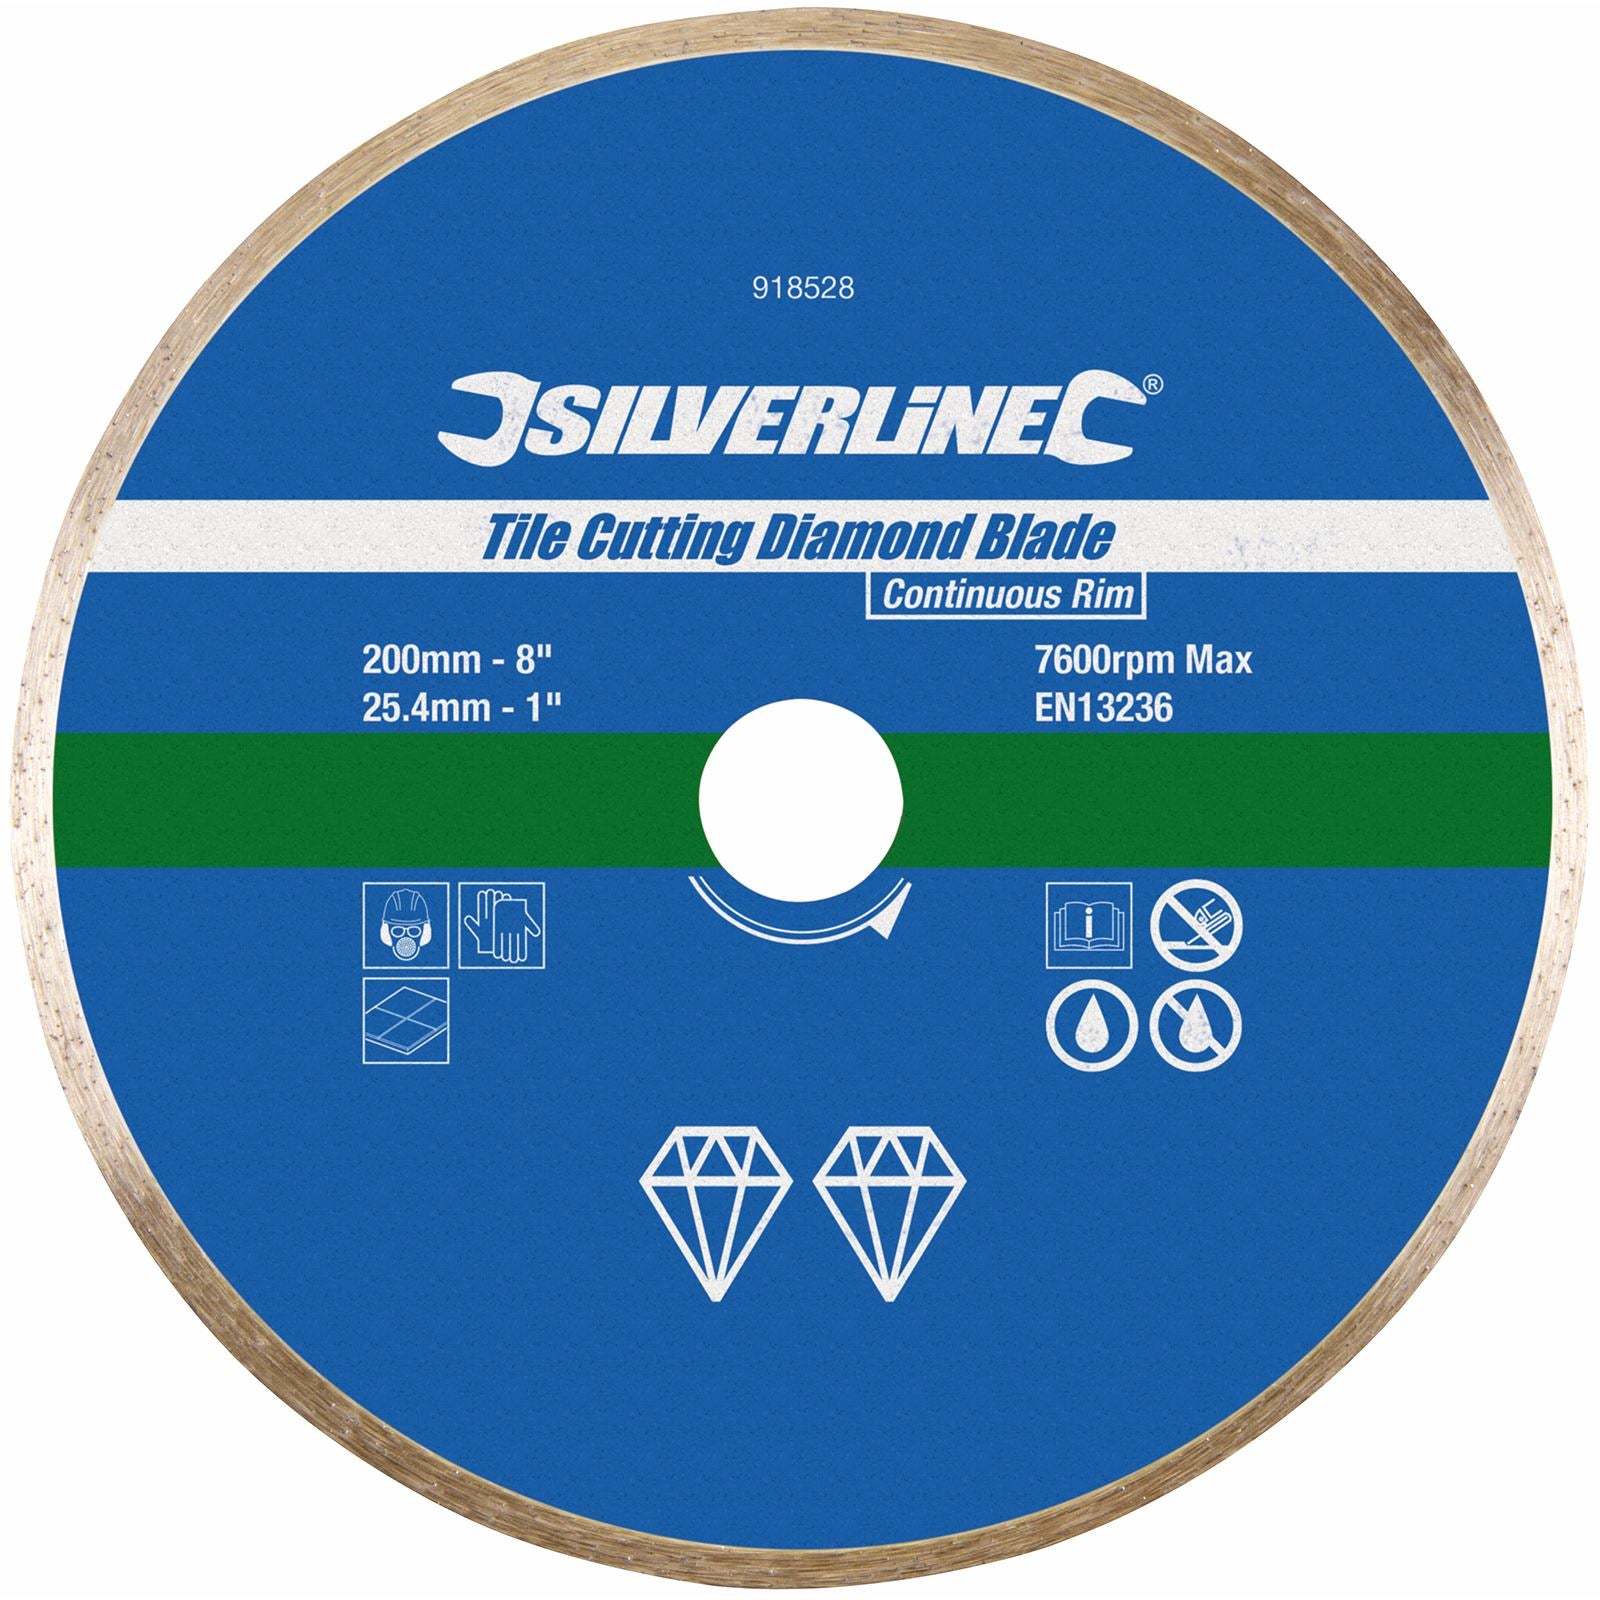 Silverline Tile Cutting Diamond Disc